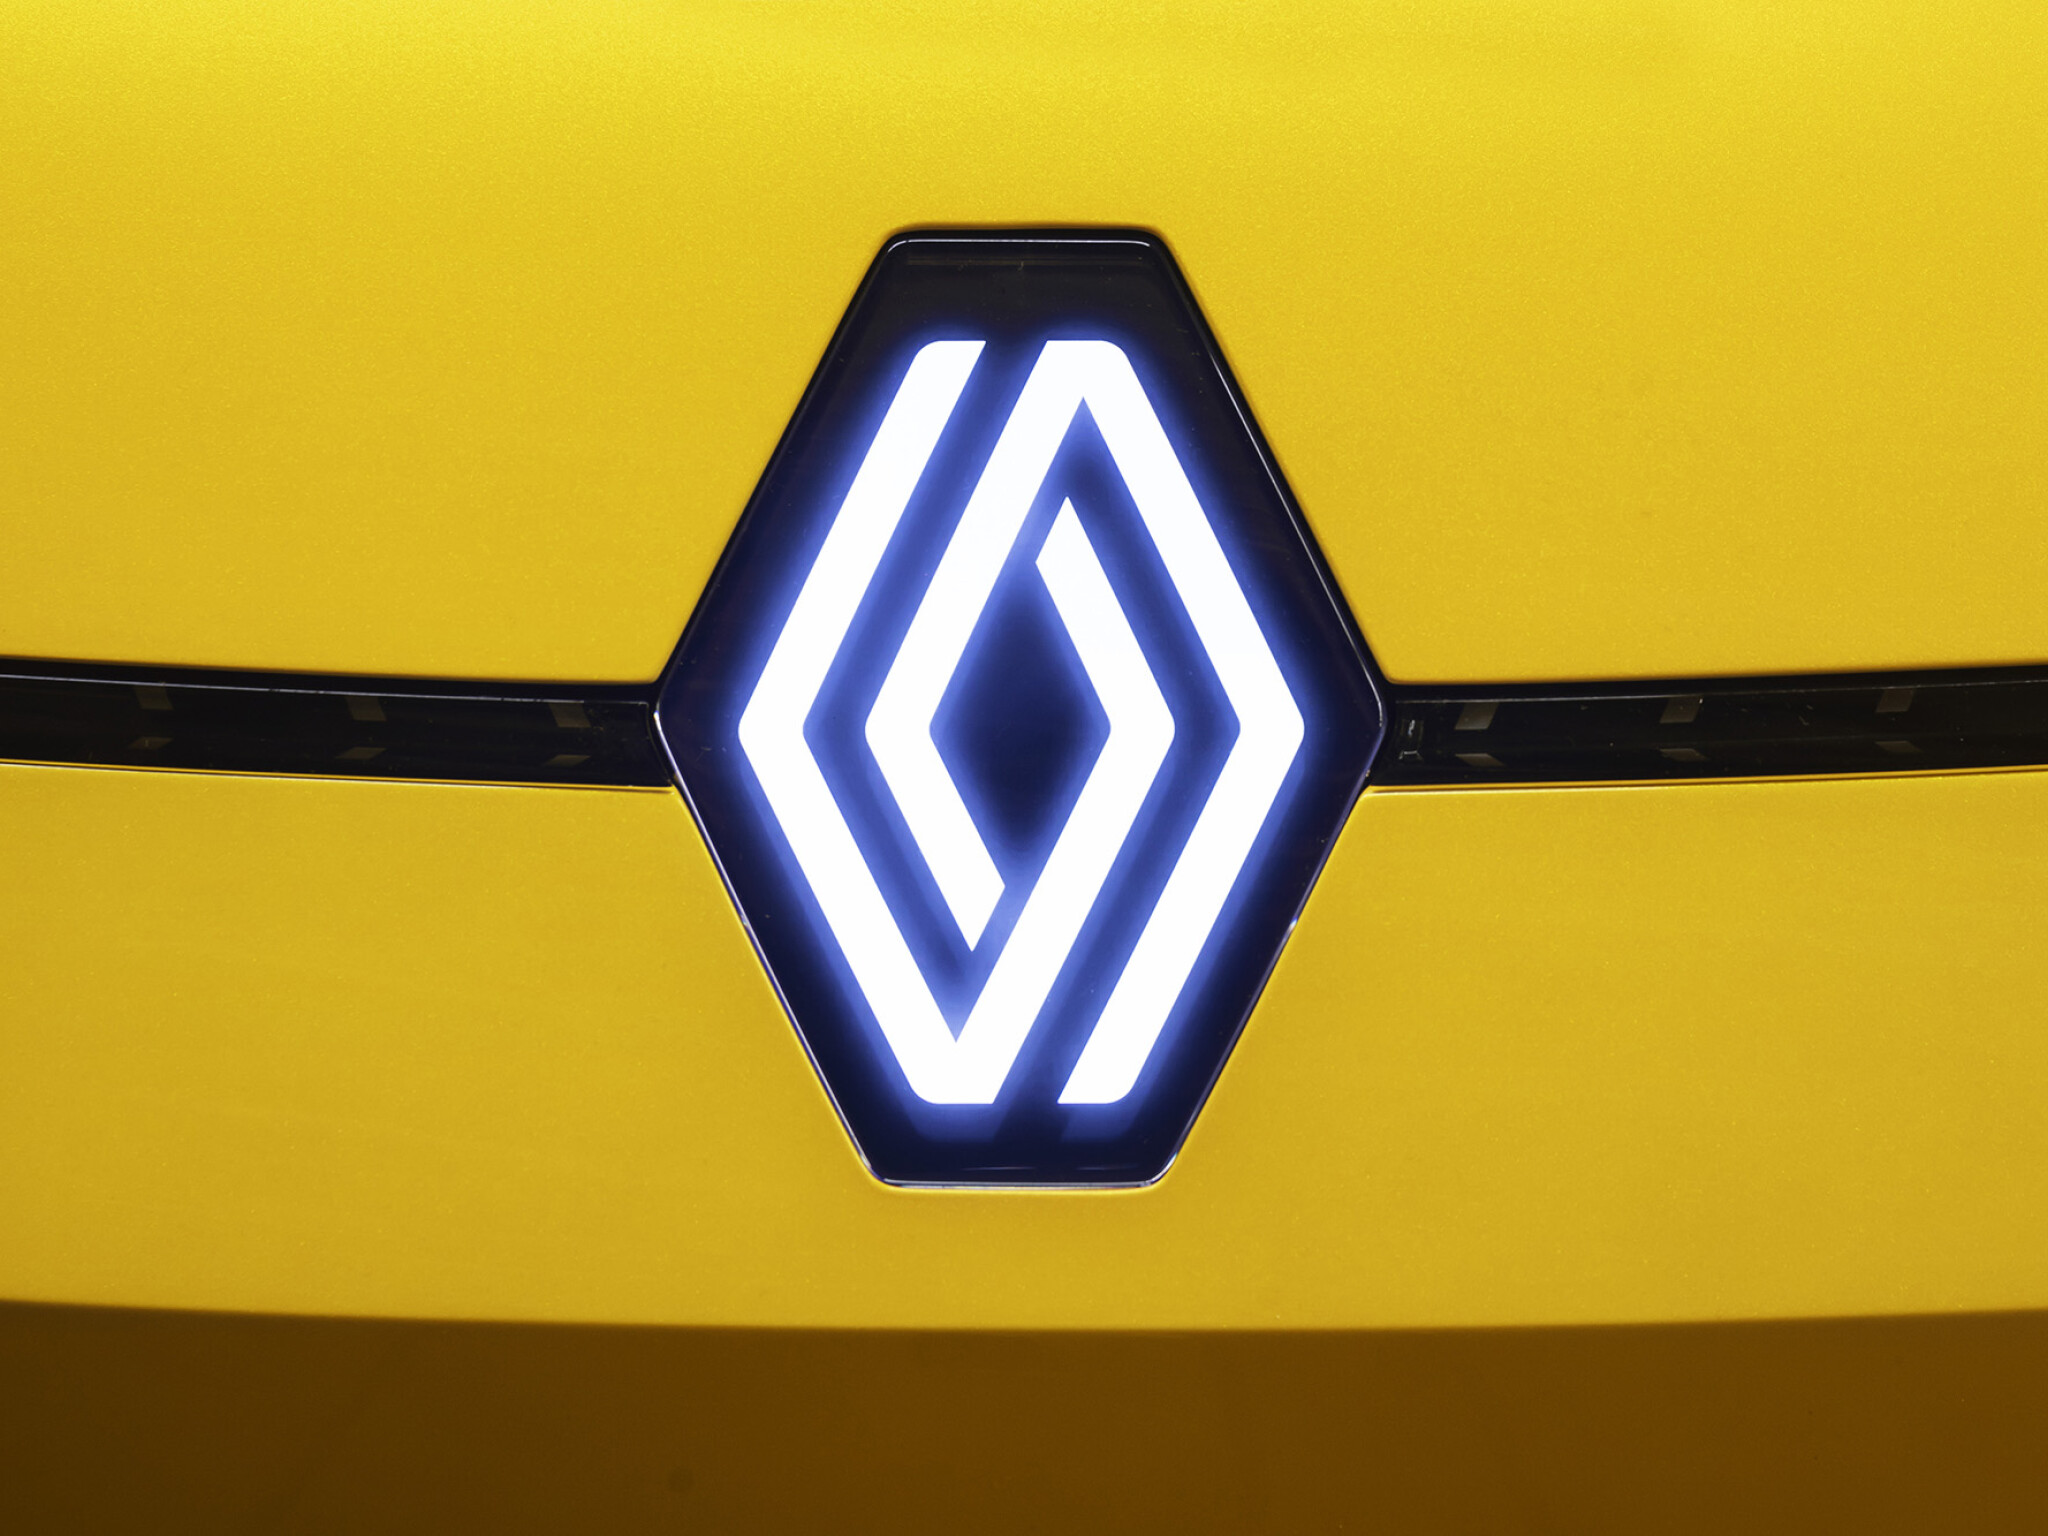 Video: Renault's new diamond logo revealed